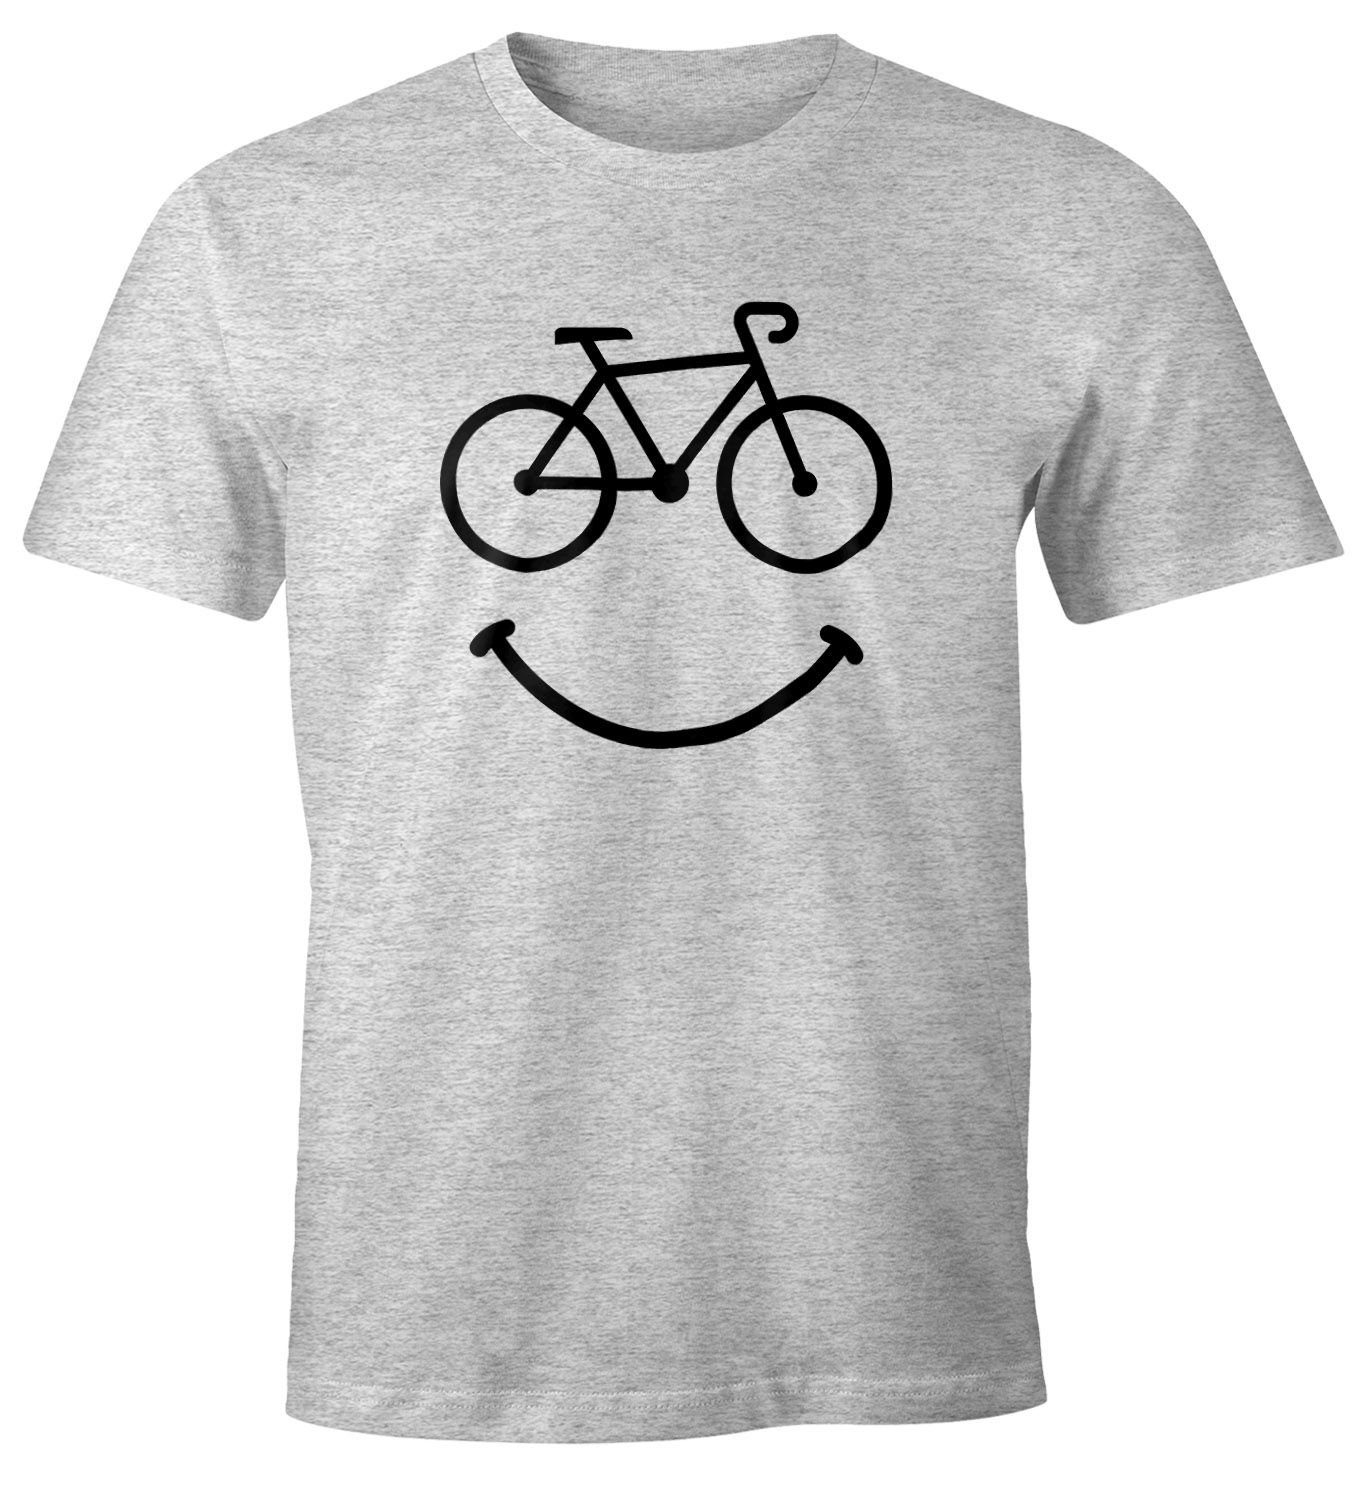 MoonWorks Print-Shirt Fahrrad Herren T-Shirt Smile Happy Bike Radfahren Fun-Shirt Moonworks® mit Print grau | T-Shirts